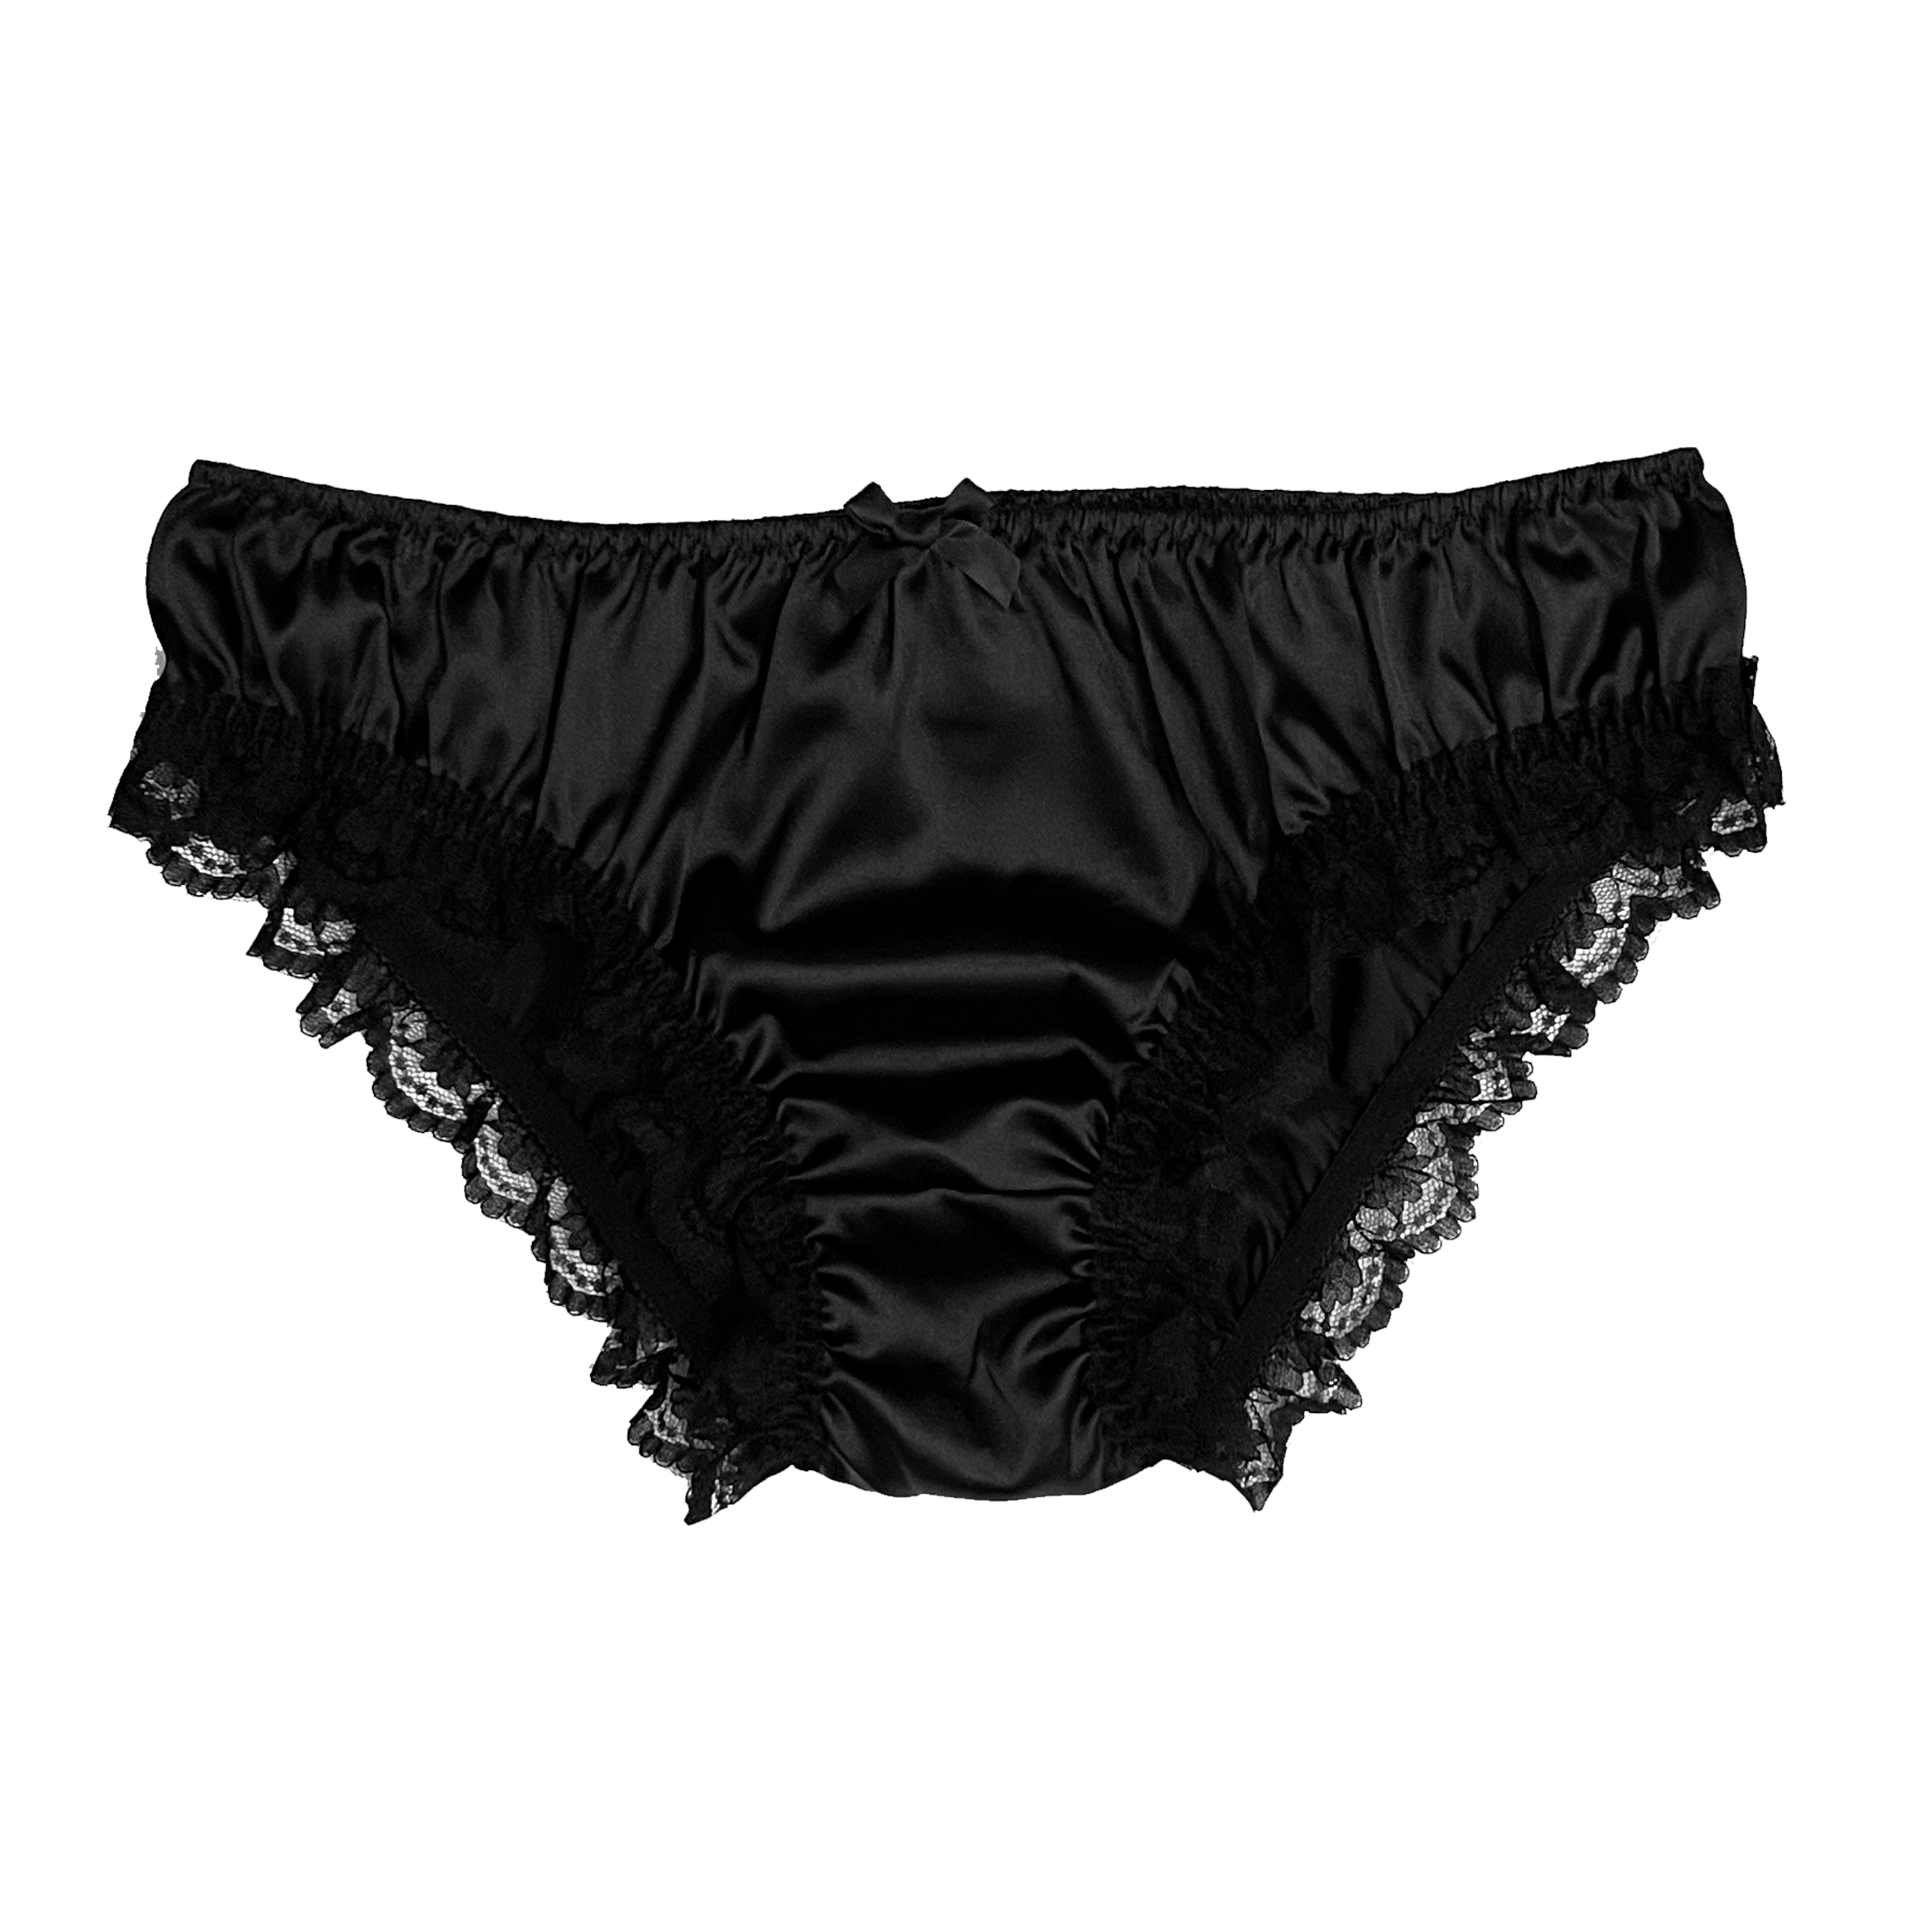 Black Satin Lace Frilly Sissy Cdtv Full Panties Knicker Underwear S Xxl 18 34 Picclick